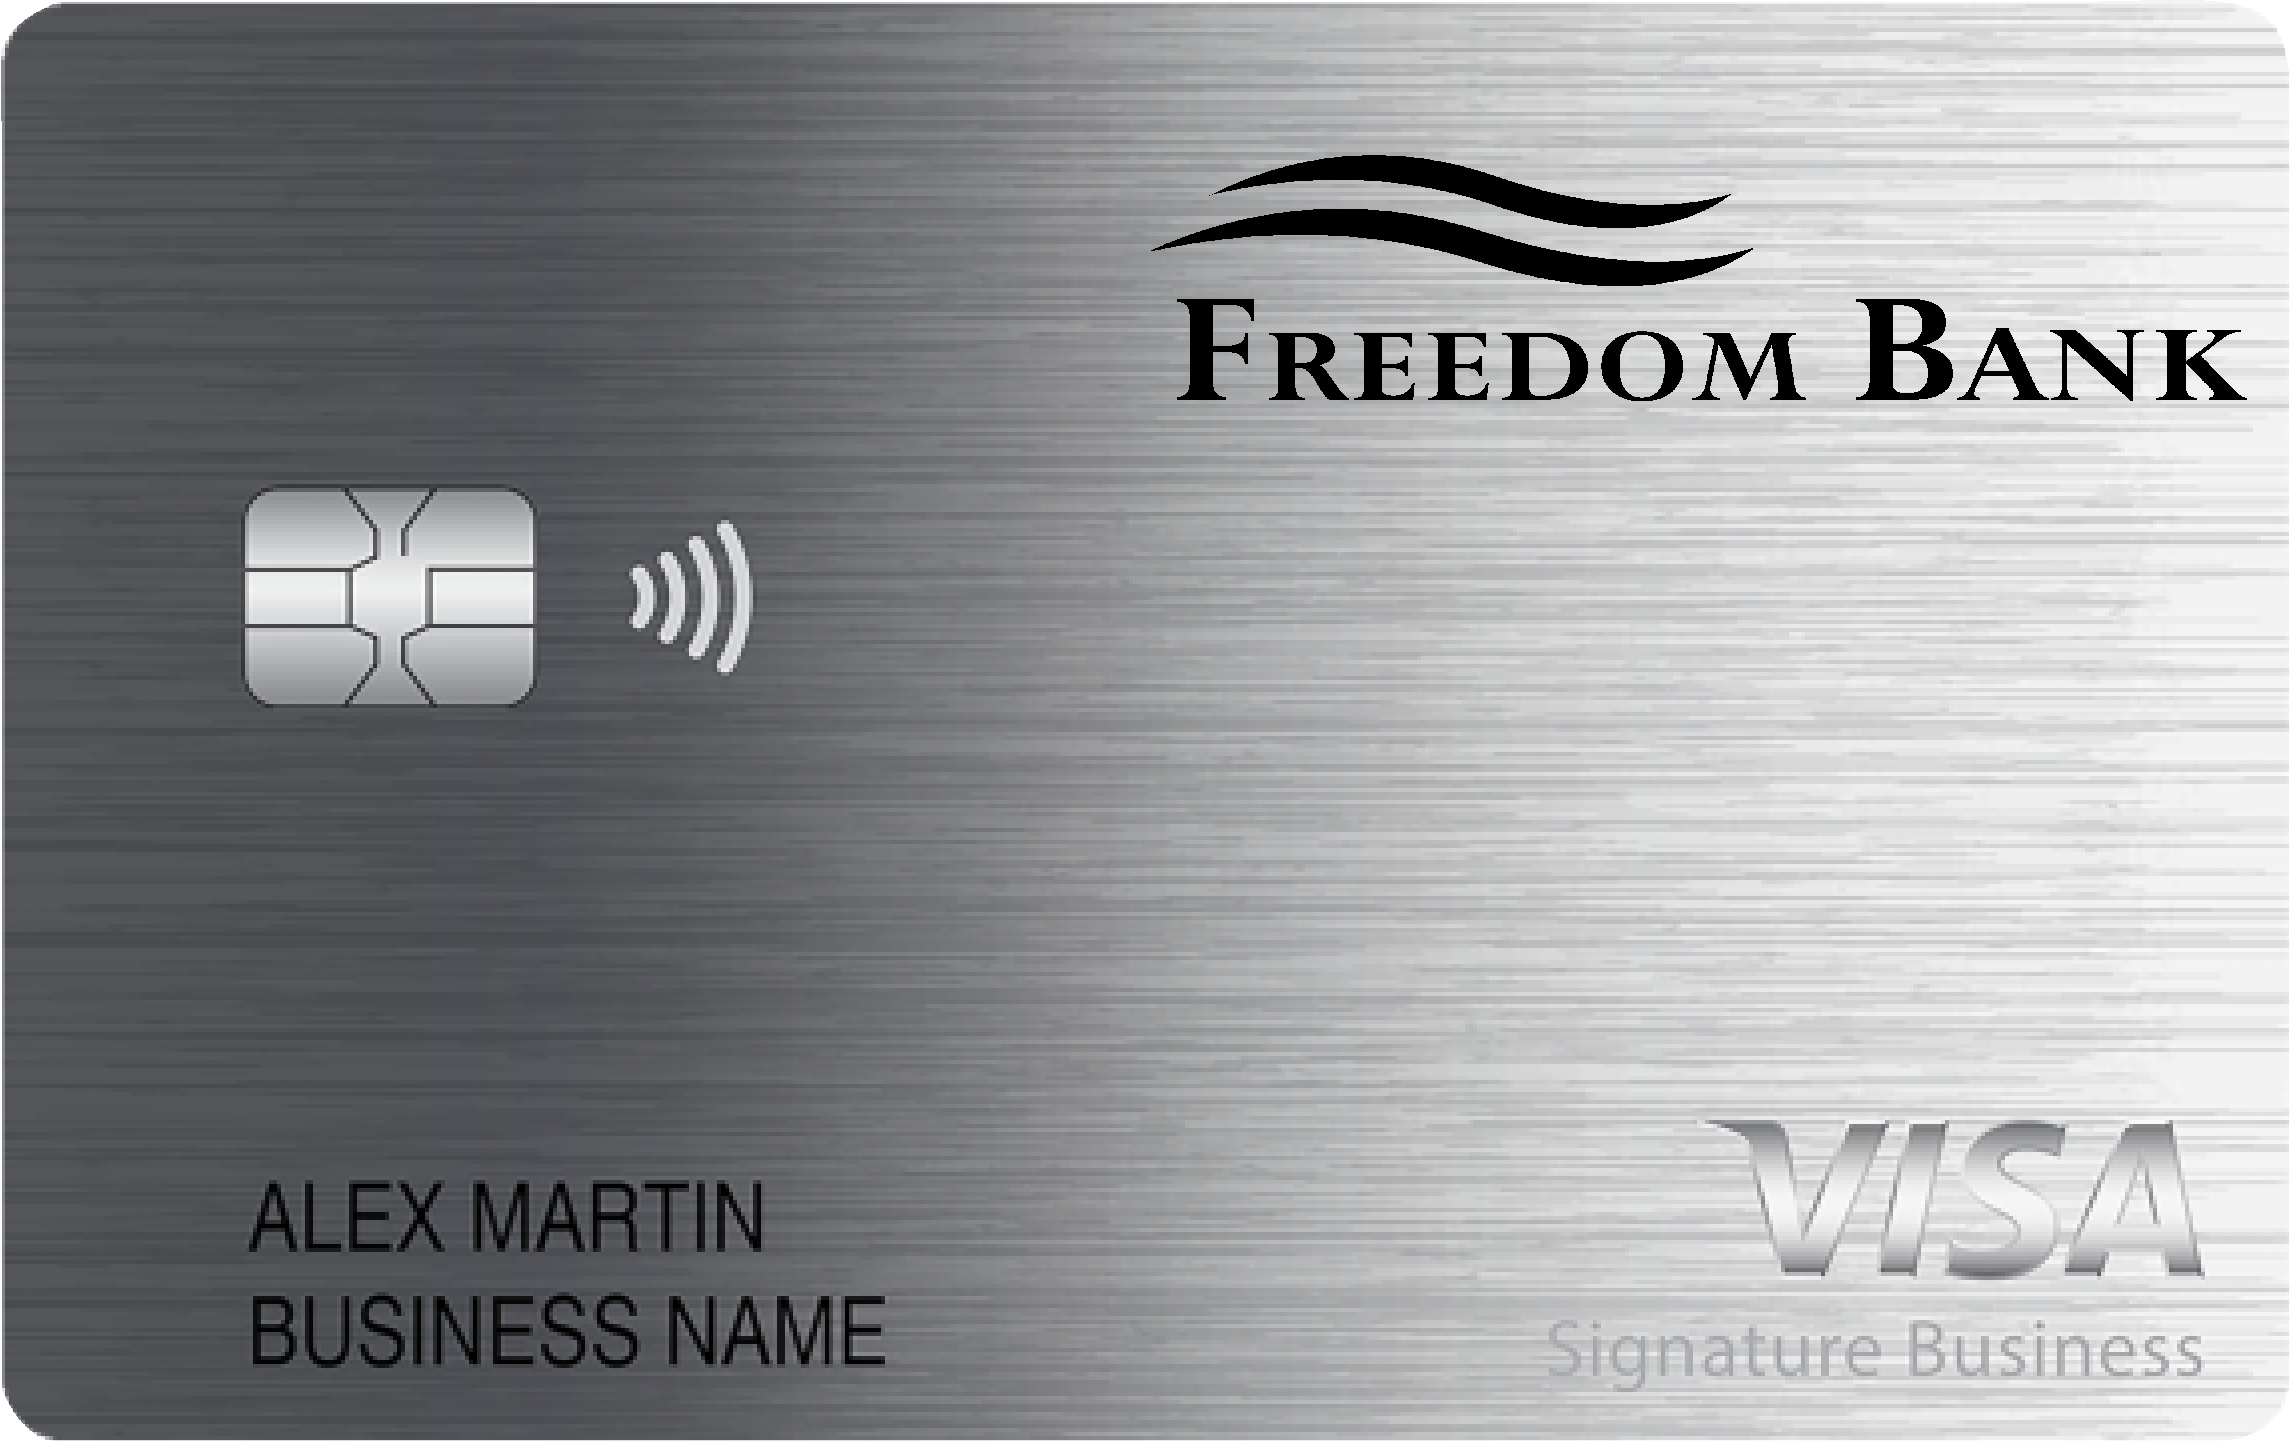 Freedom Bank Smart Business Rewards Card